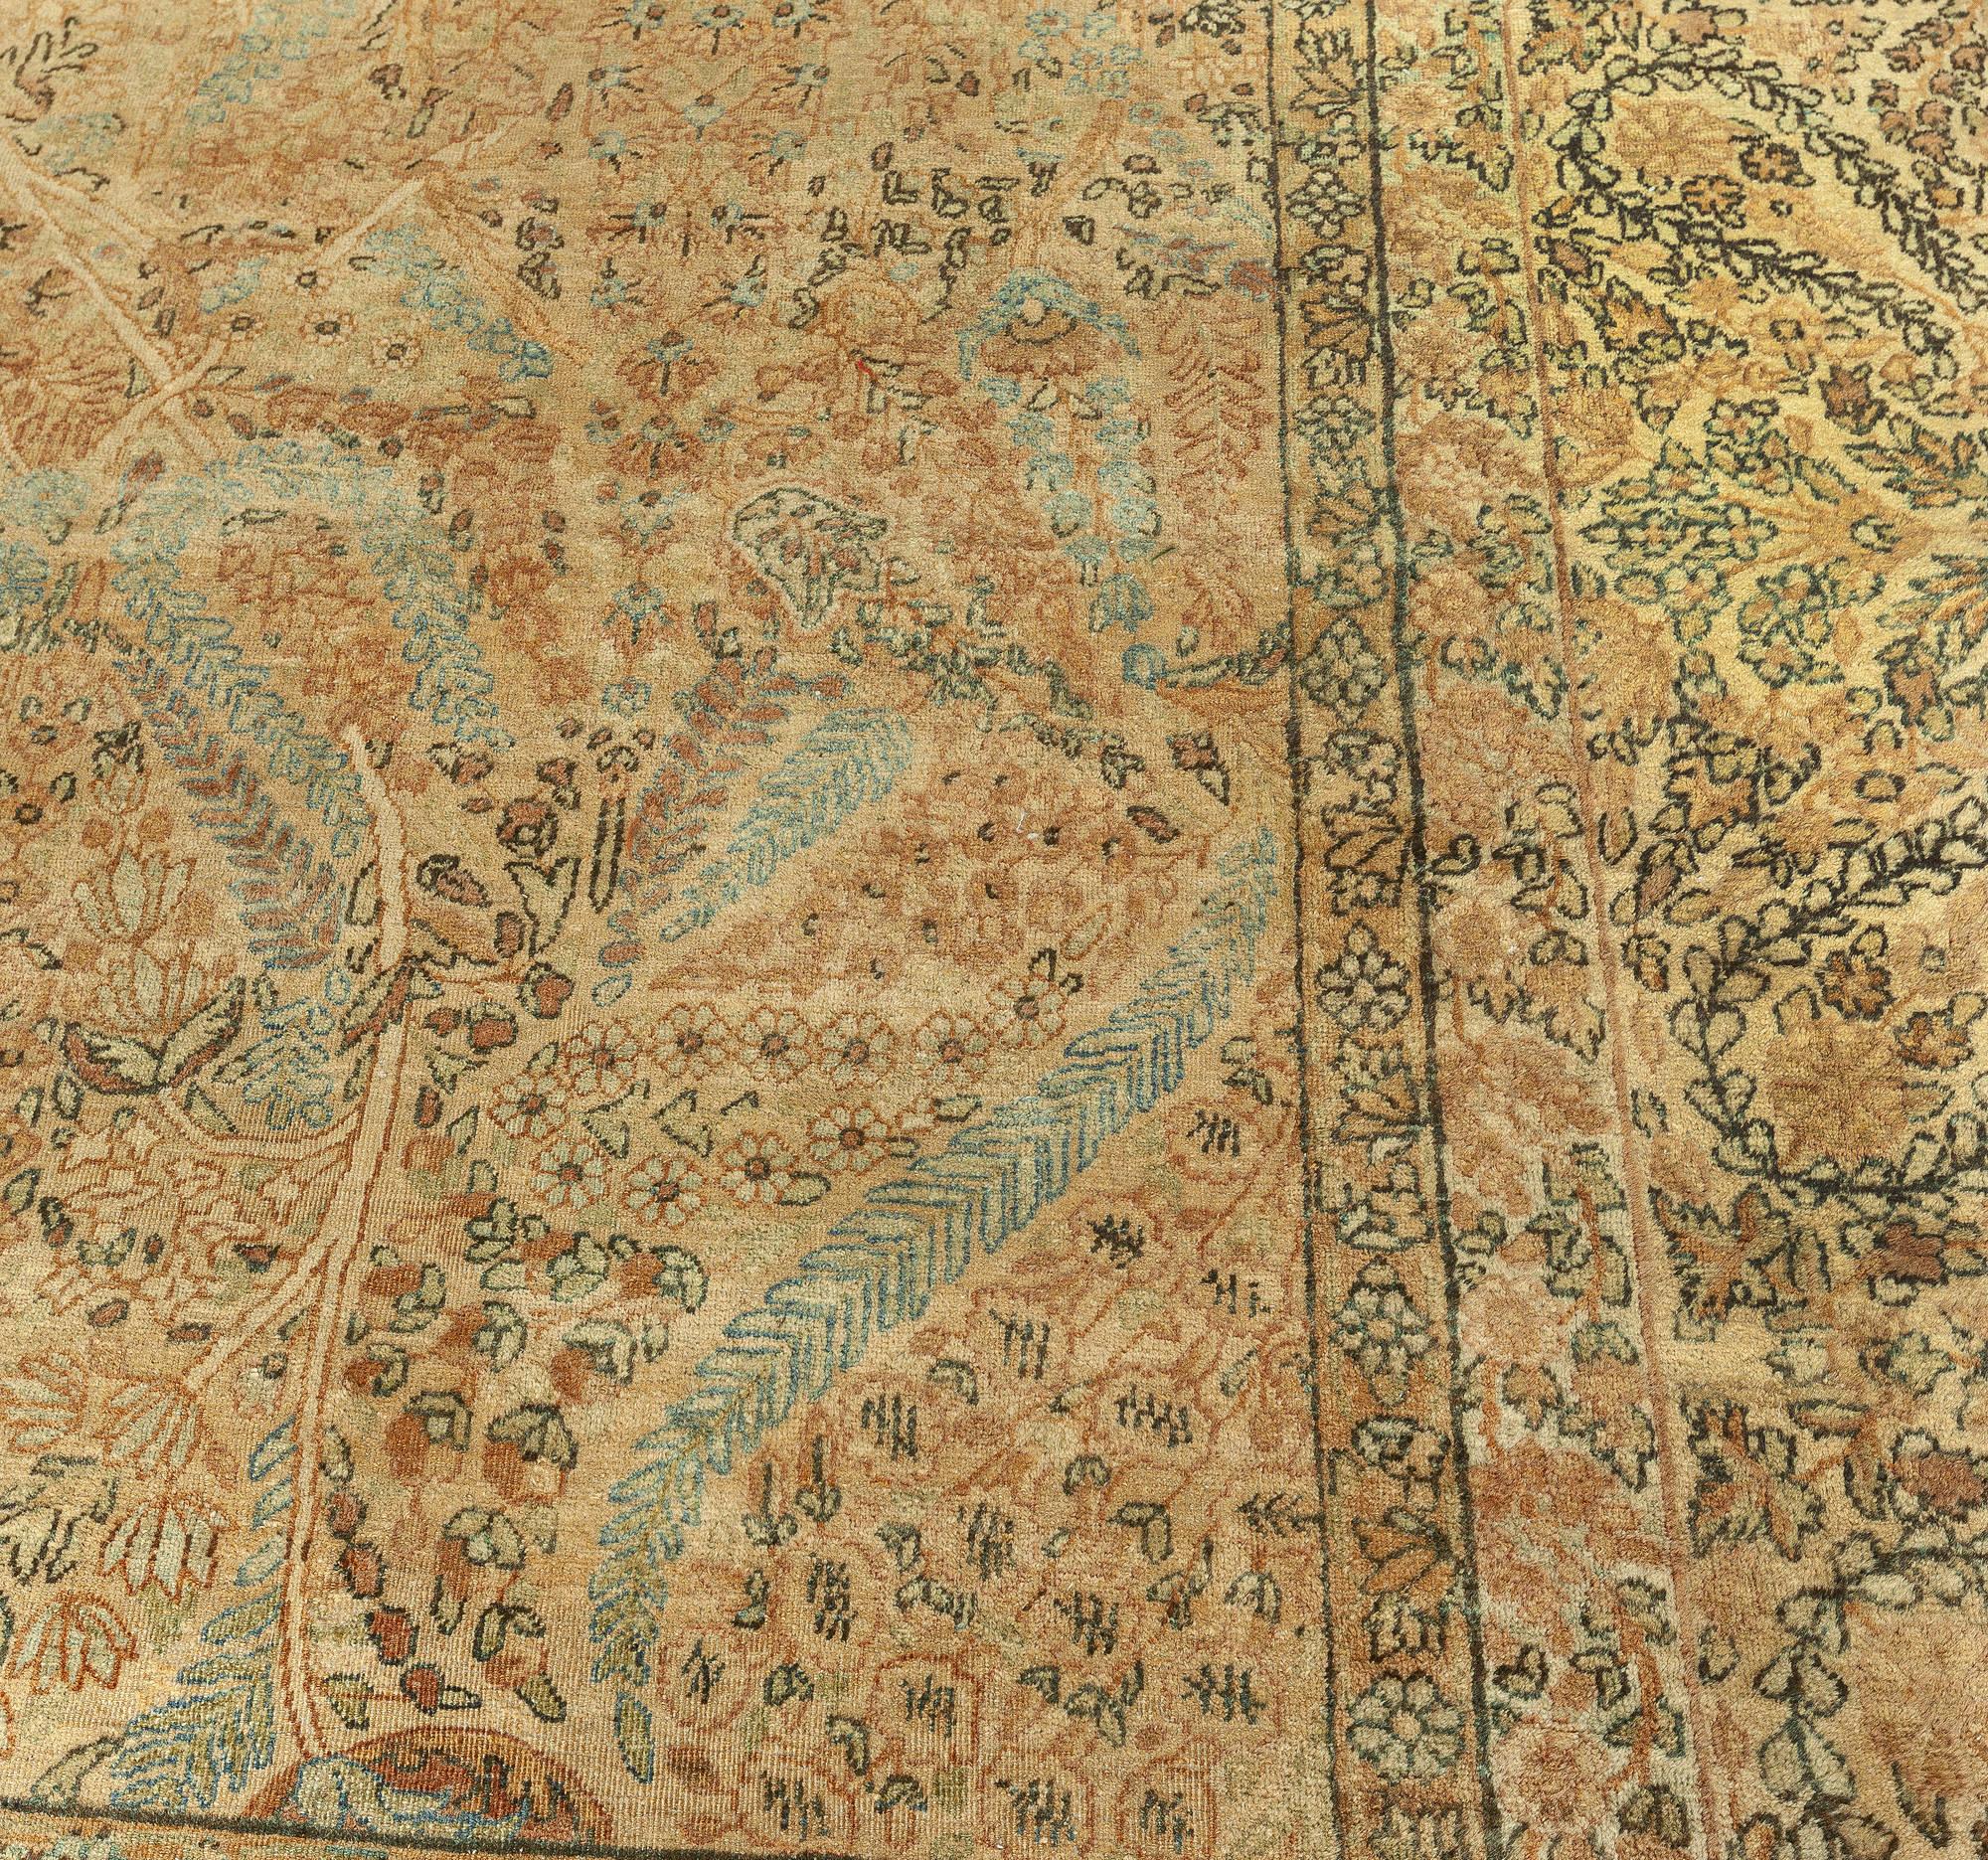 Authentic Early 20th century Persian Kirman botanic carpet
Size: 8'8